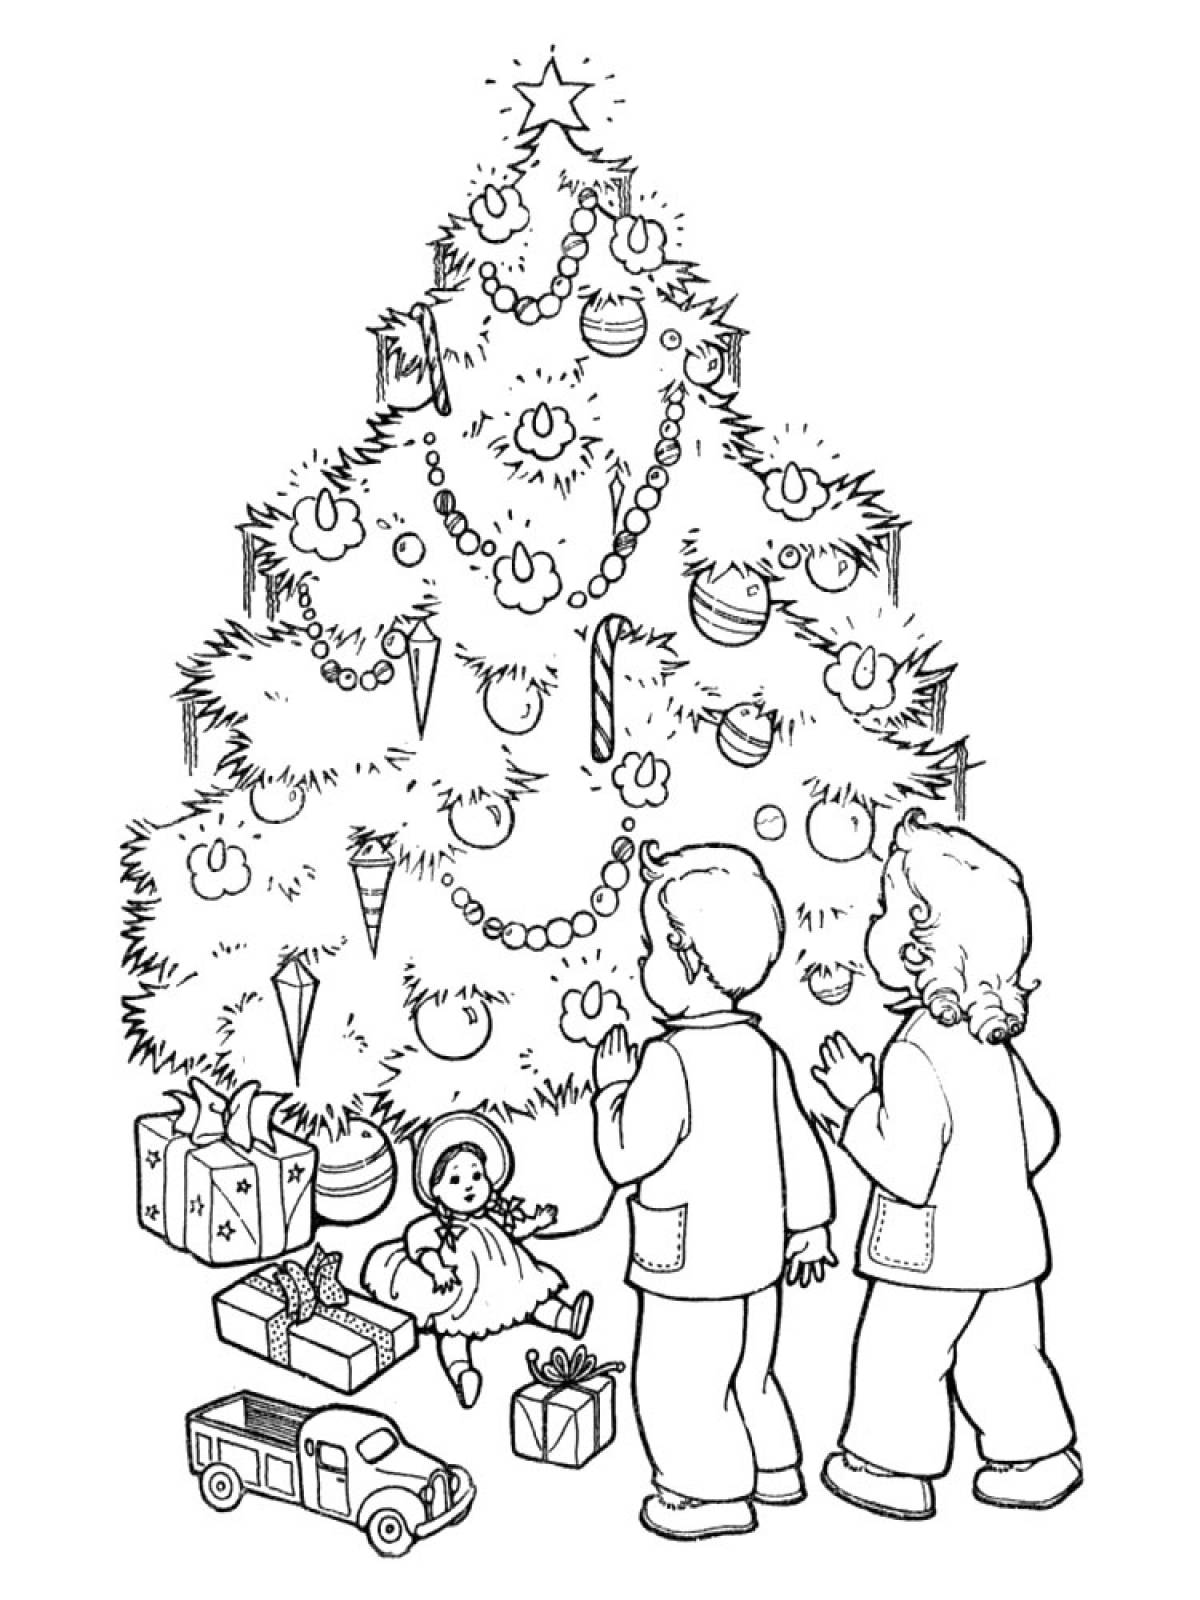 Children decorate the Christmas tree